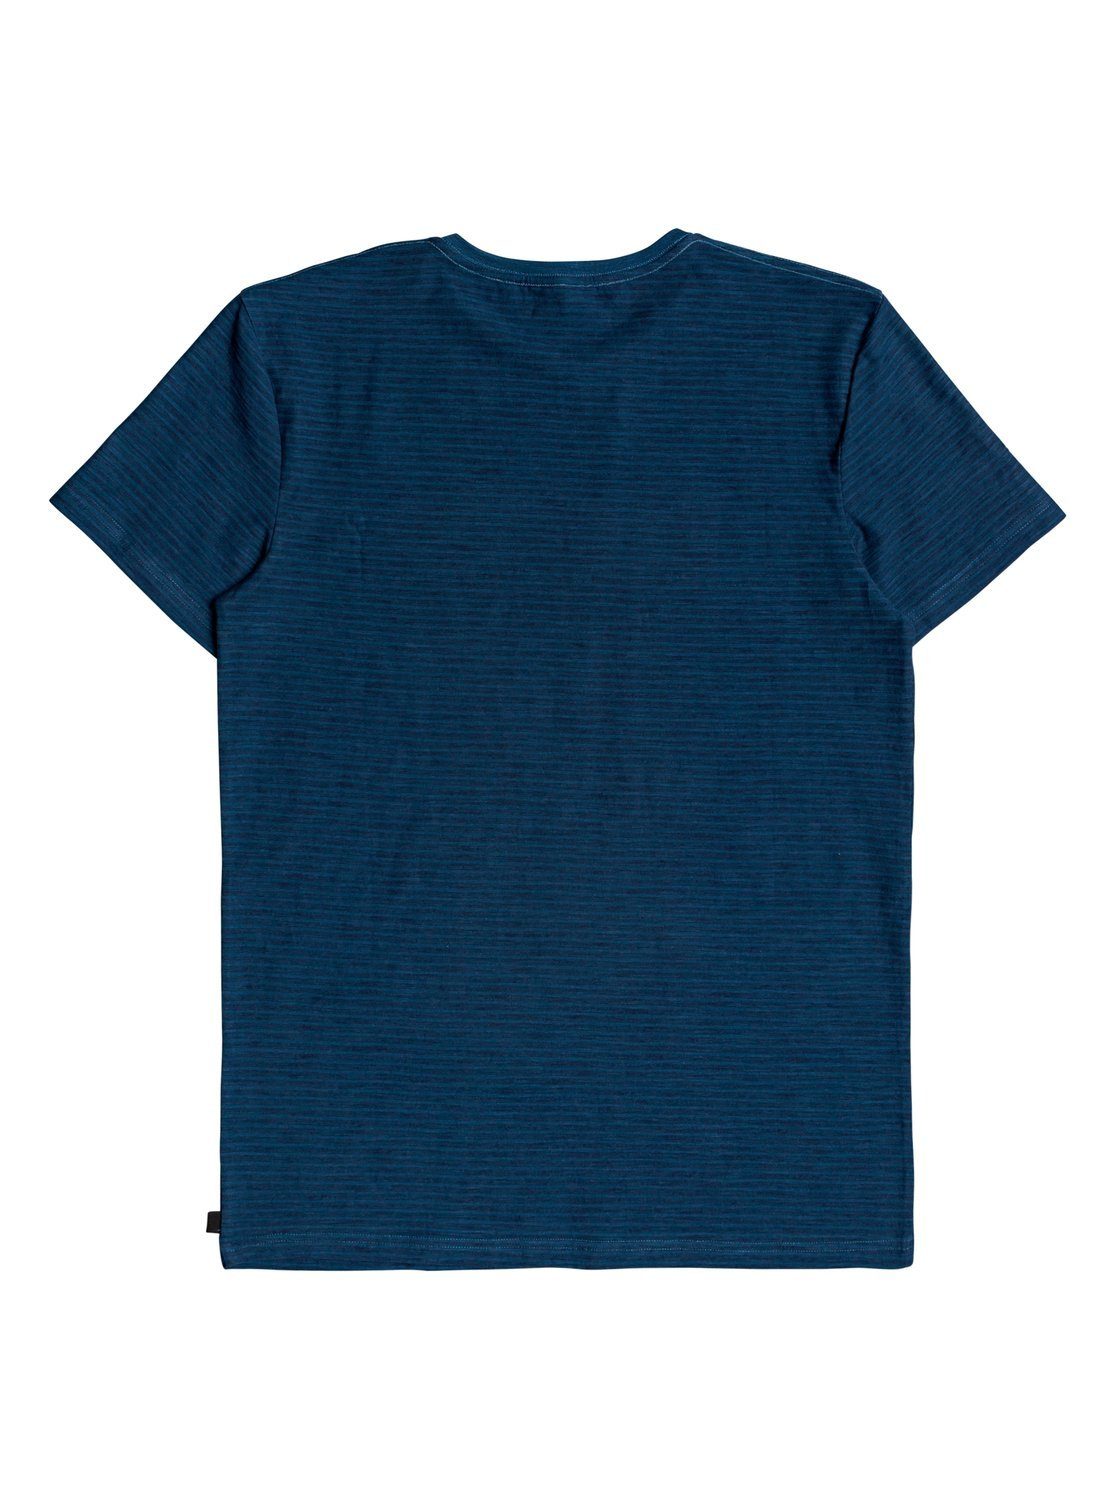 Quiksilver T-Shirt Kentin Kentin Majolica Blue